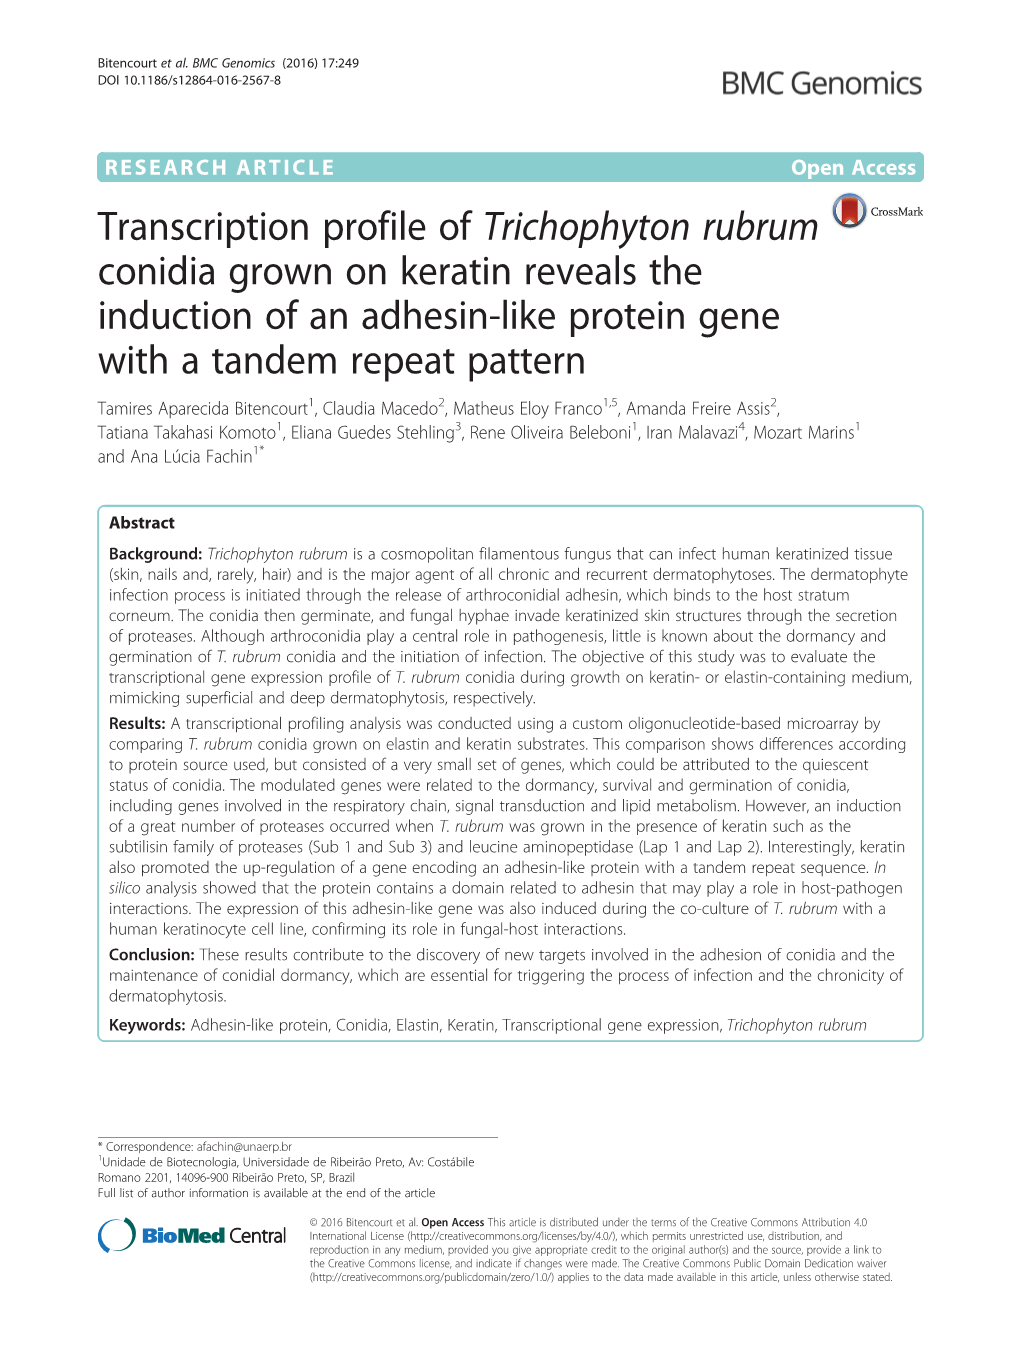 Transcription Profile of Trichophyton Rubrum Conidia Grown on Keratin